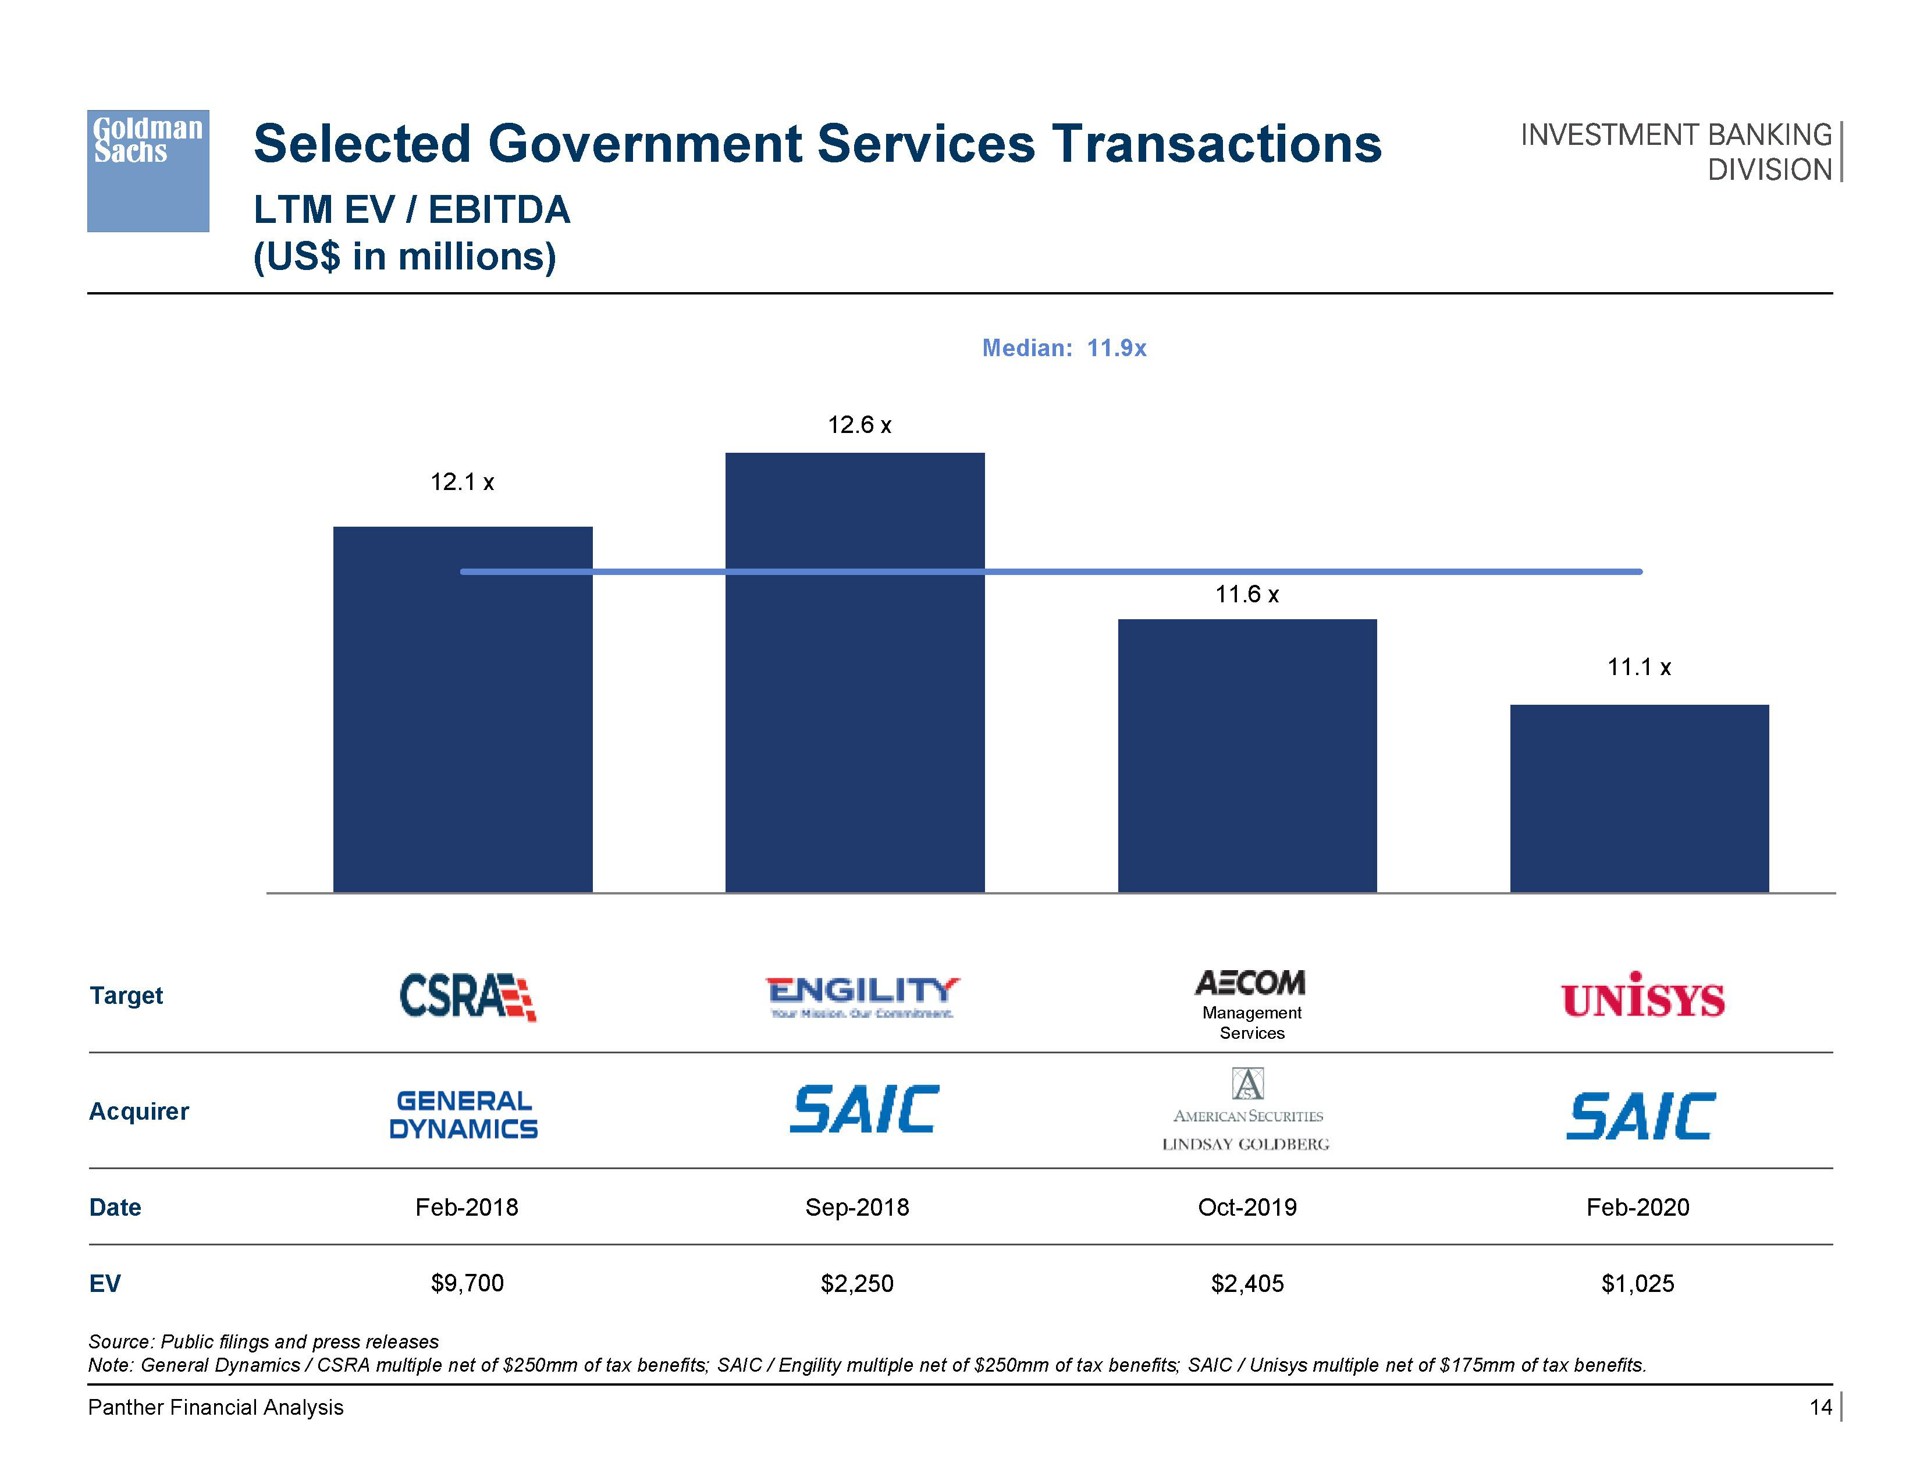 selected government services transactions ean target ach saic saic | Goldman Sachs